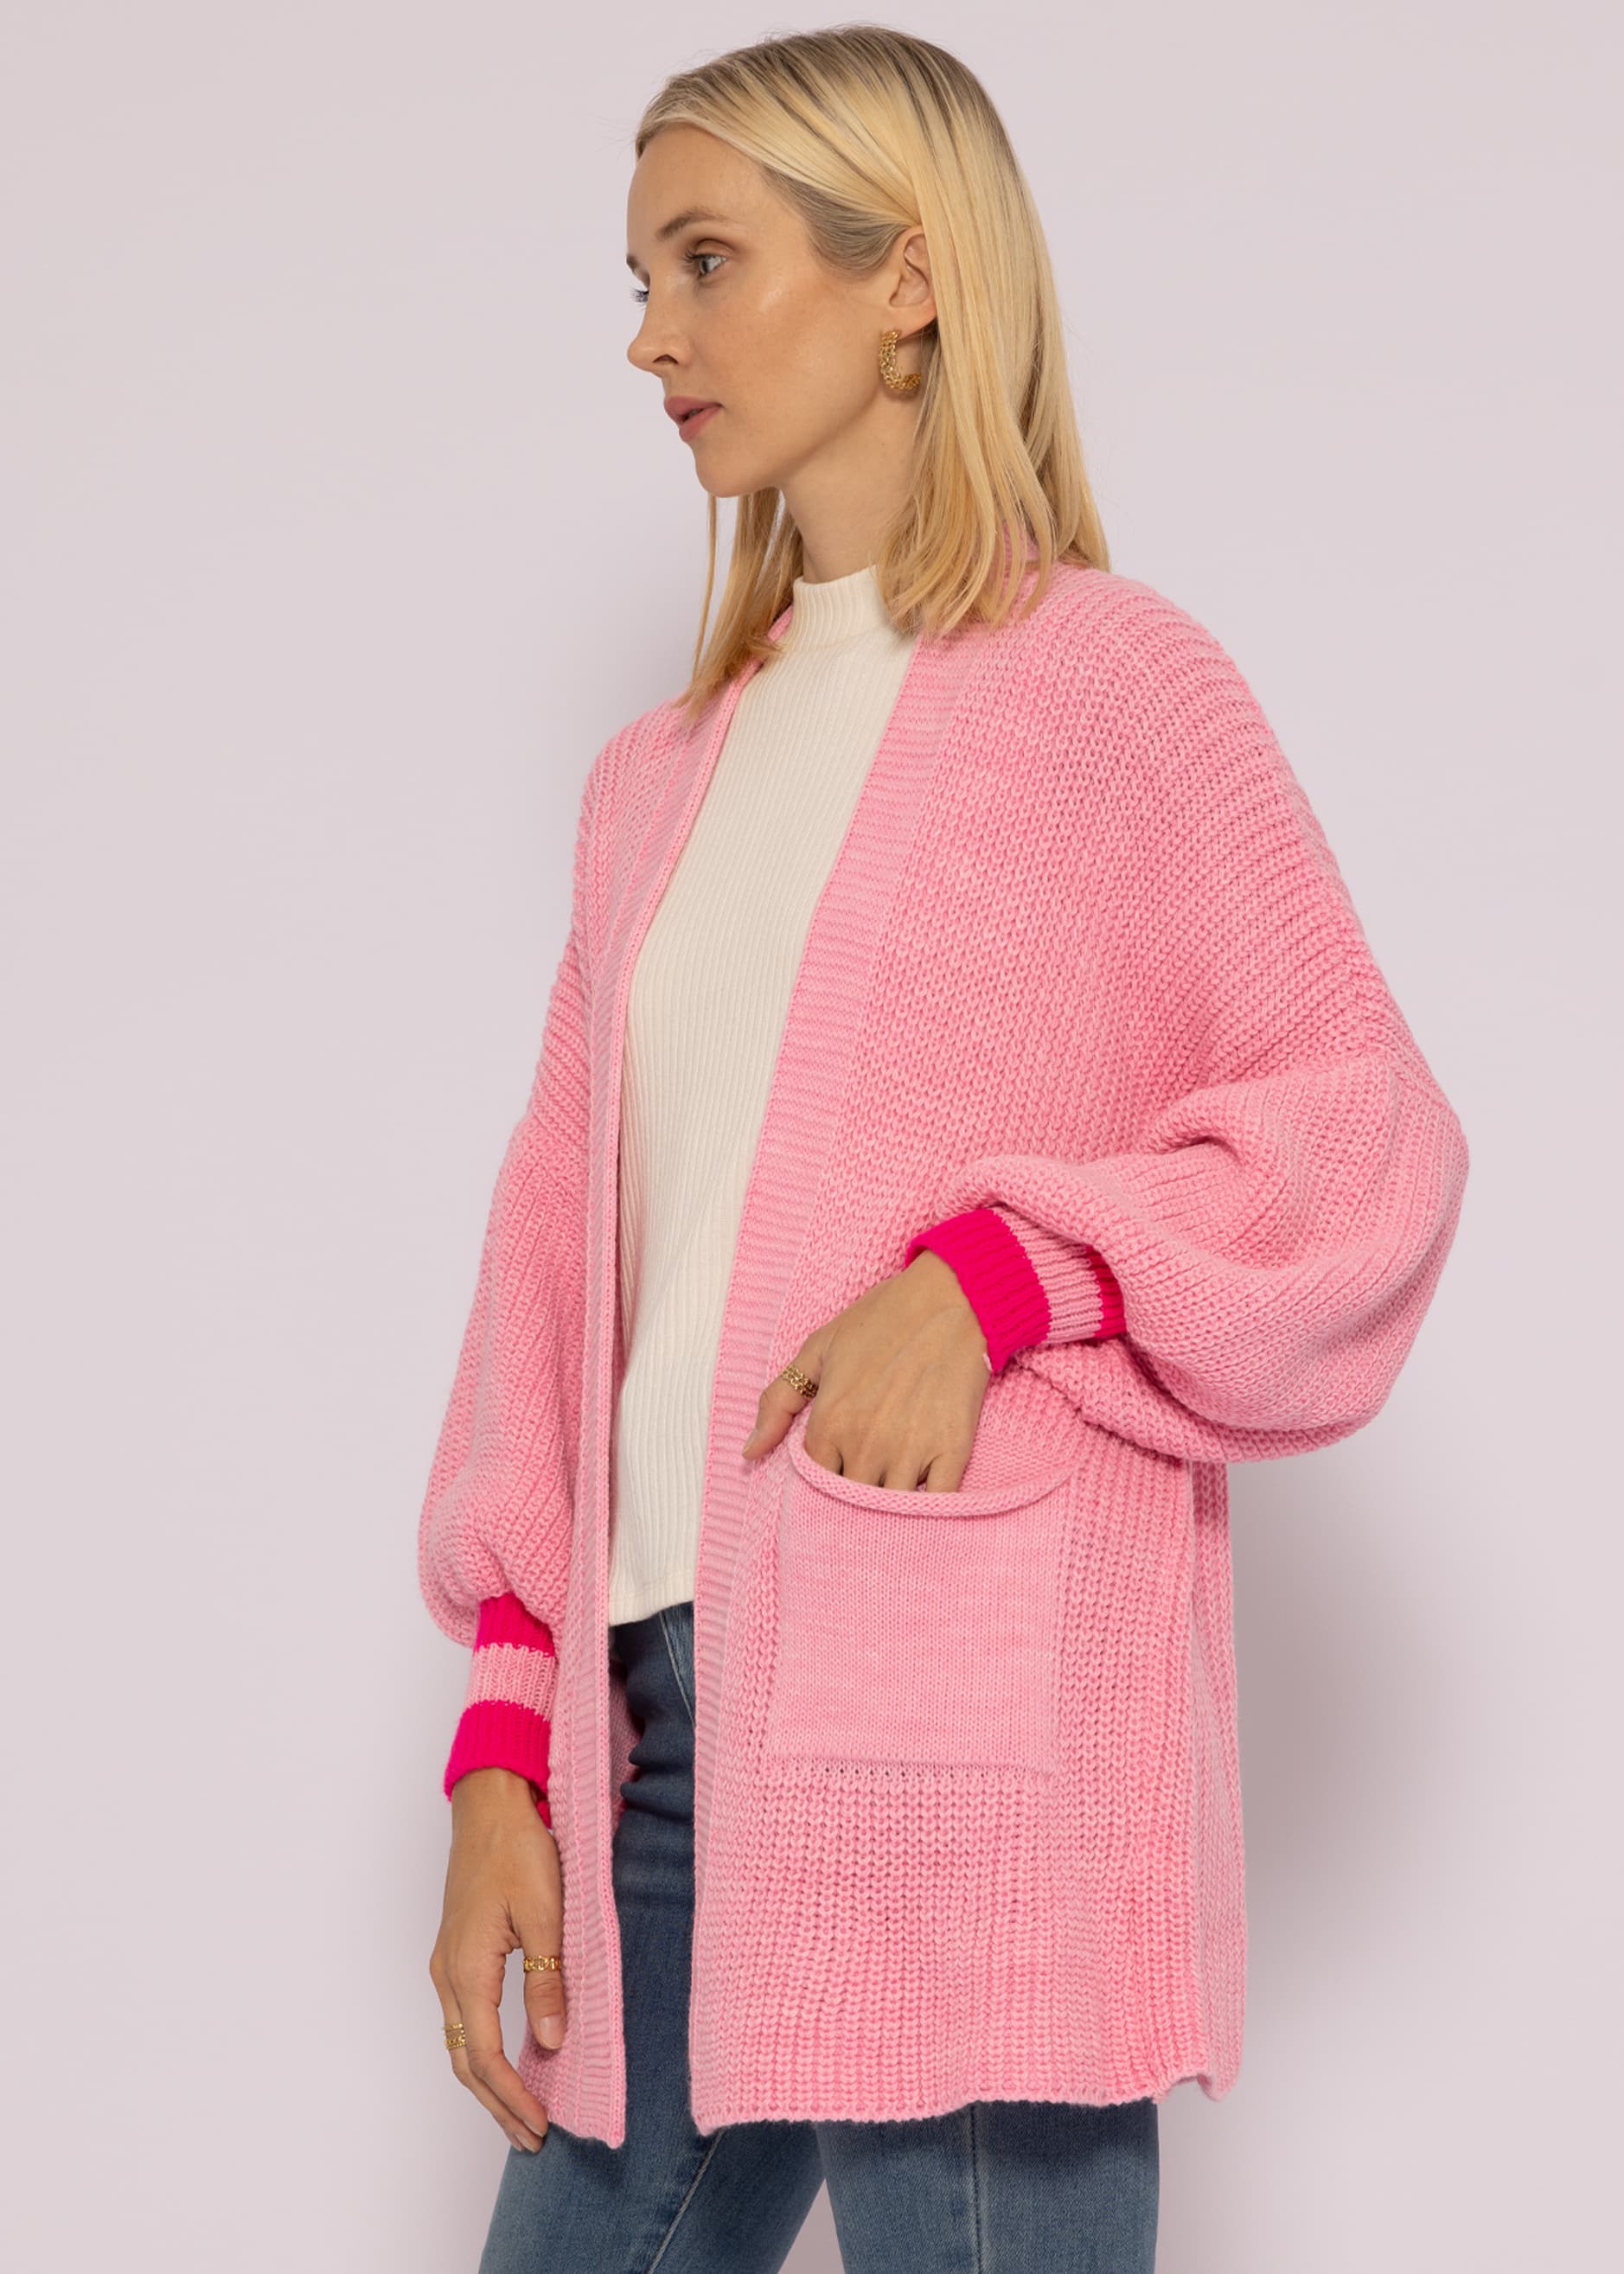 Cardigan pink with stripes knit | SassyClassy.com